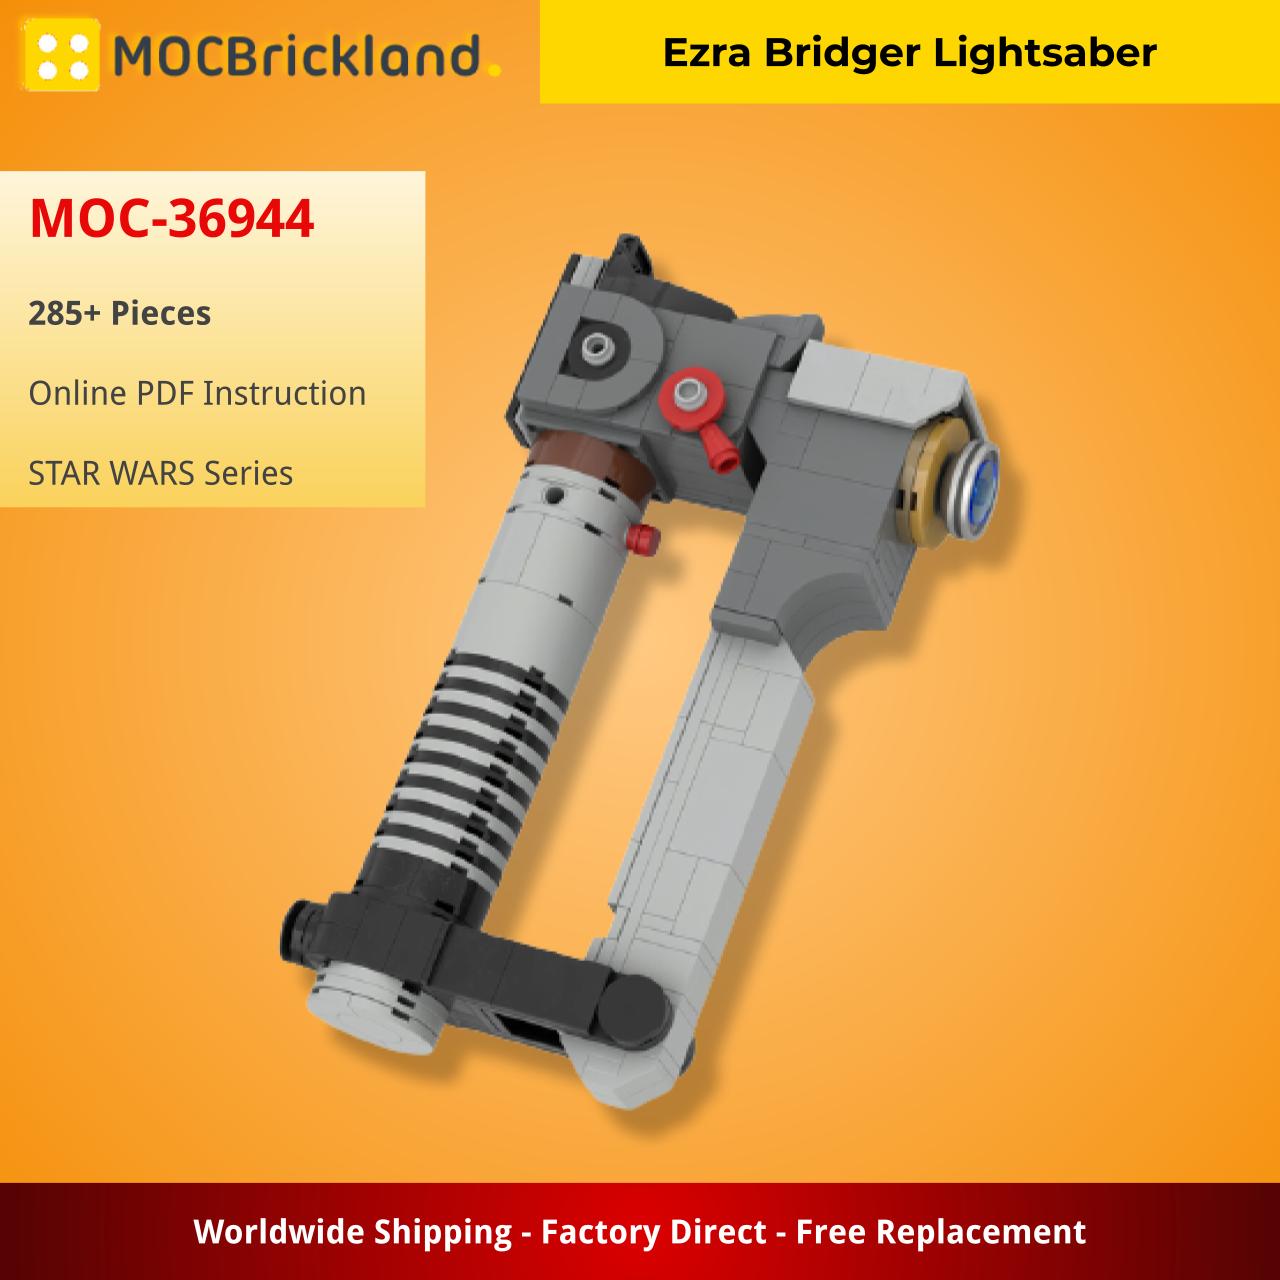 Ezra Bridger Lightsaber STAR WARS MOC-36944 with 285 pieces